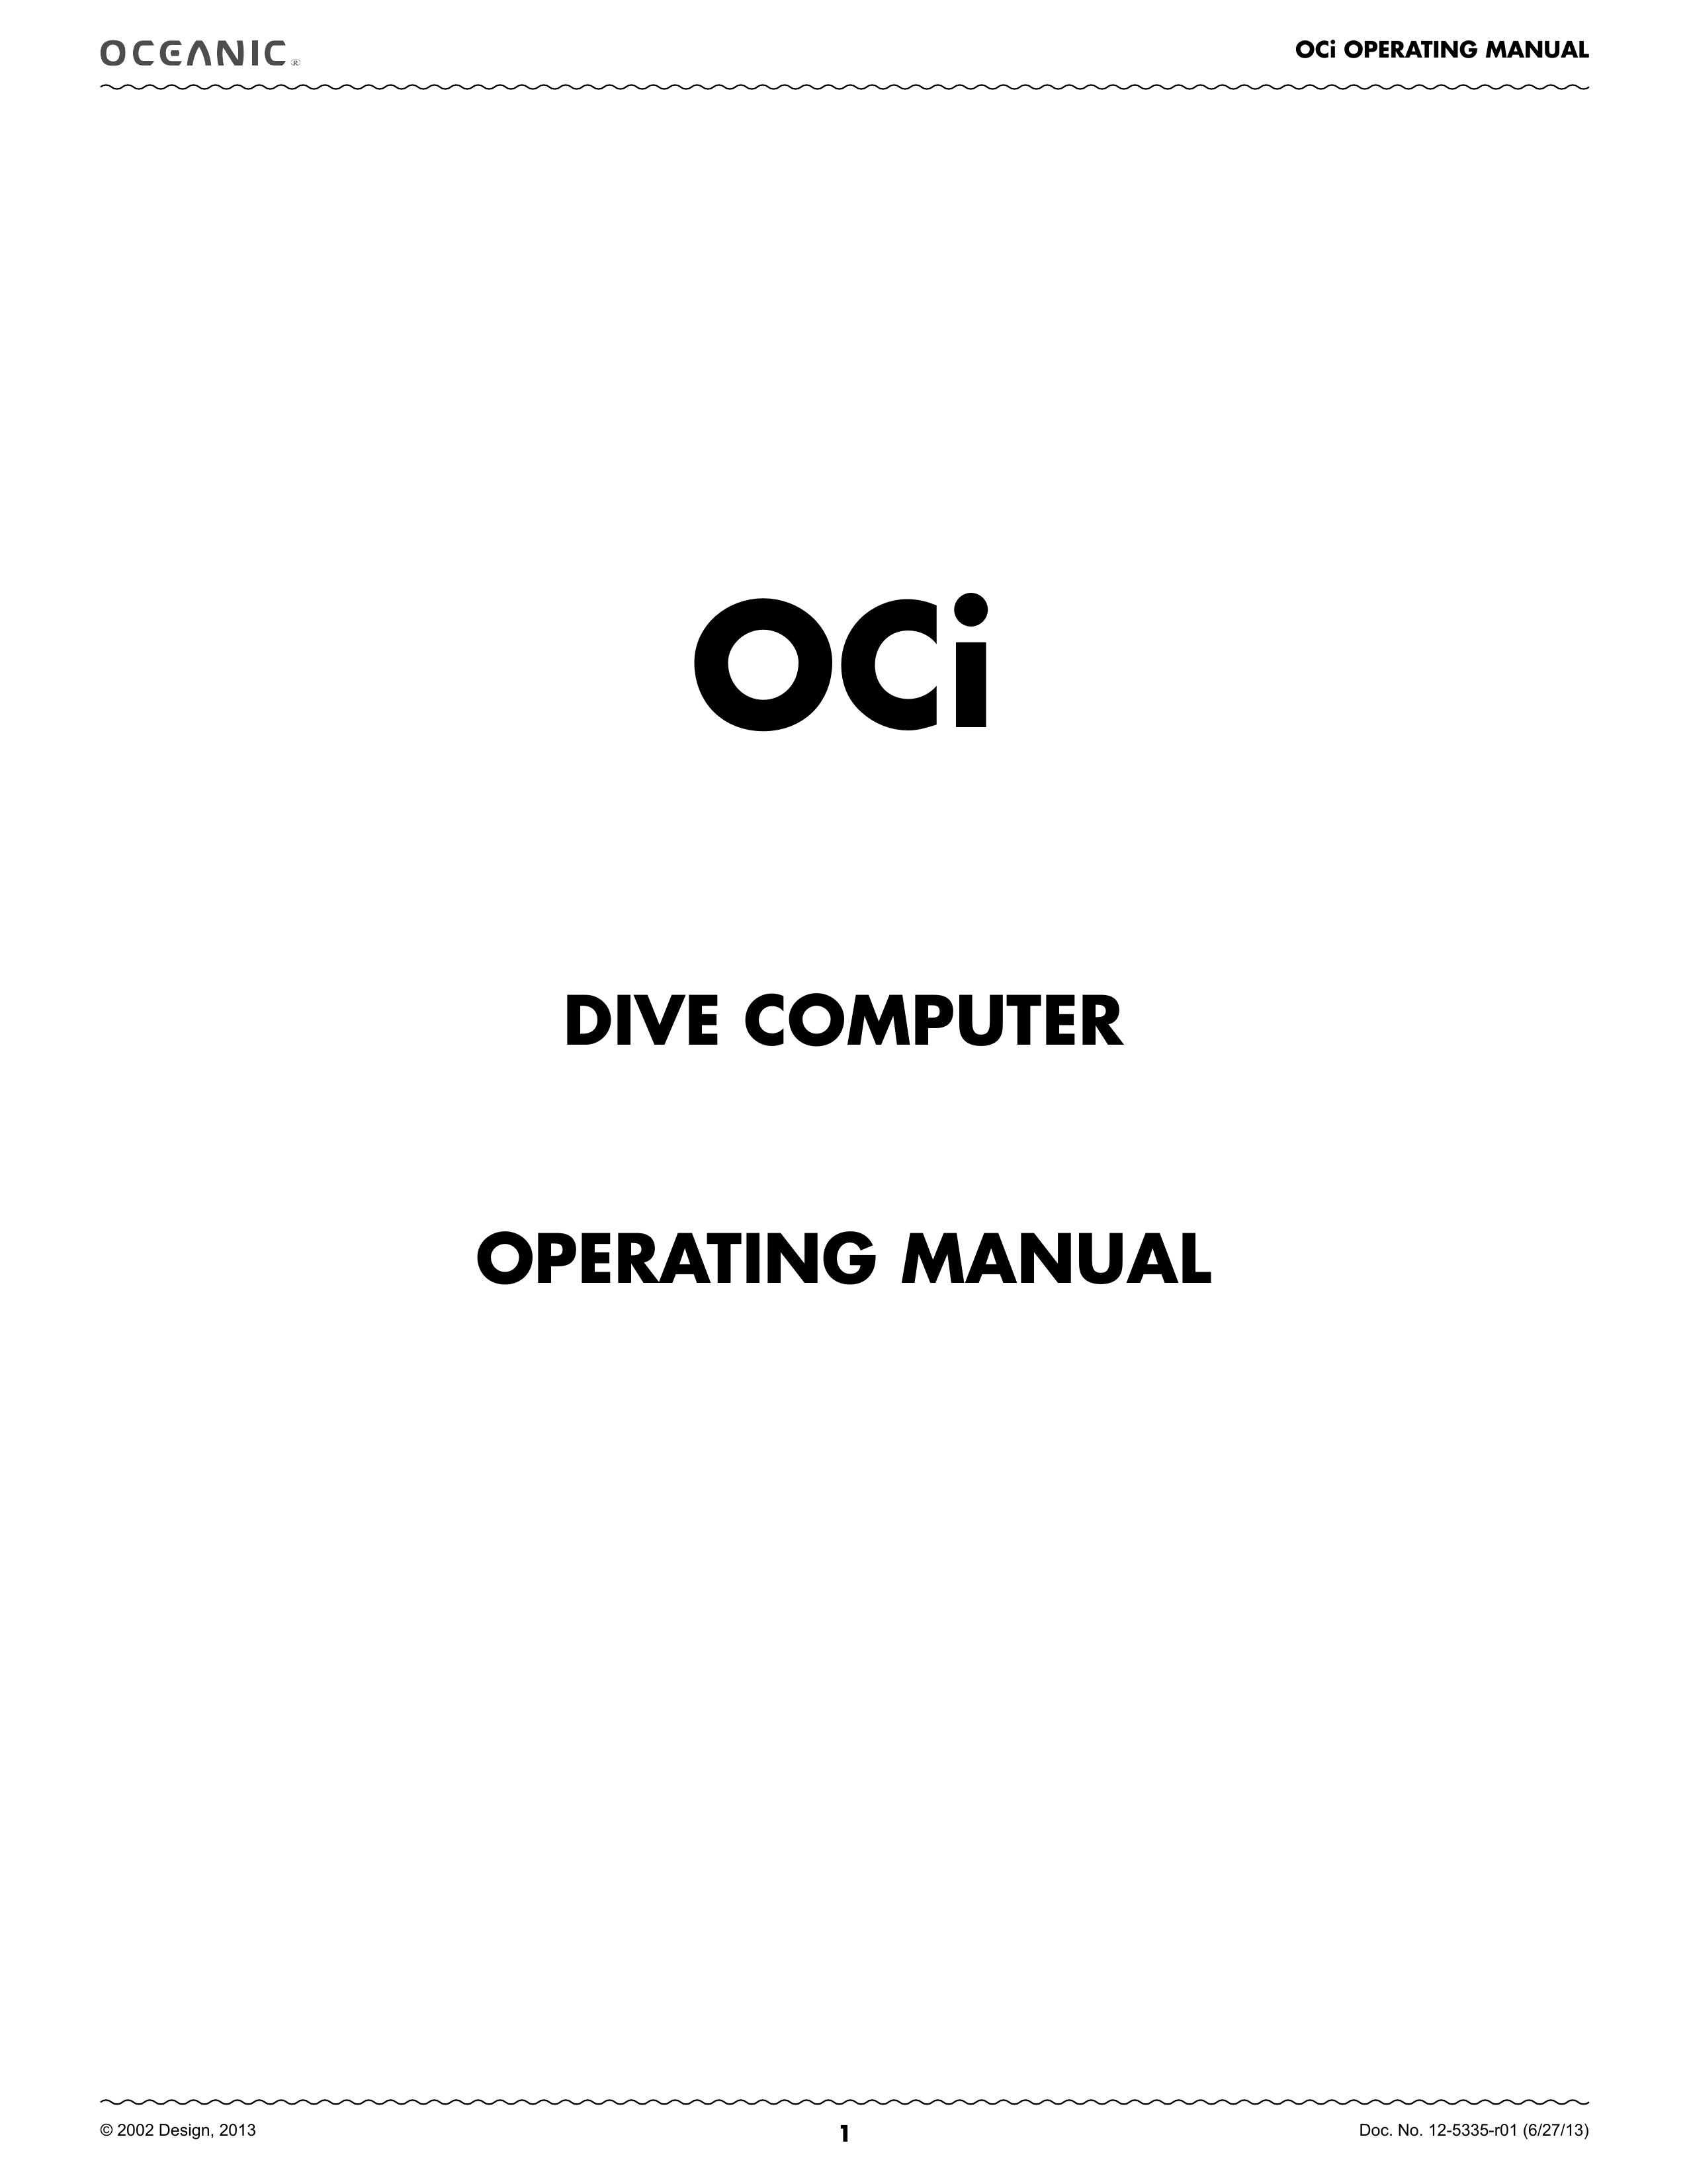 Oceanic 04-8792-07 Scuba Diving Equipment User Manual